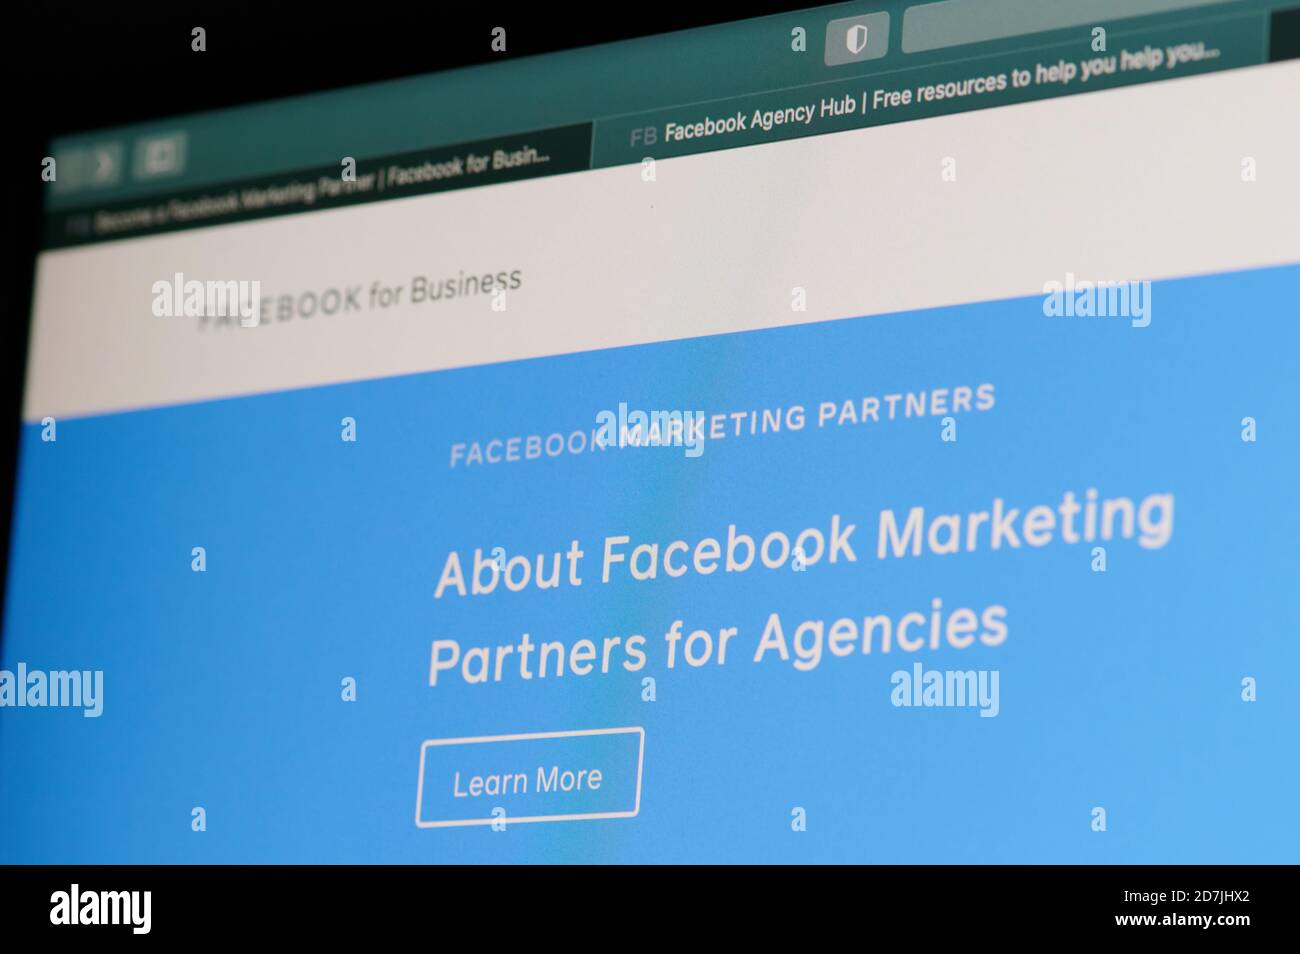 New york, USA - October 23, 2020: Facebook marketing partners for agencies screen display close up view Stock Photo